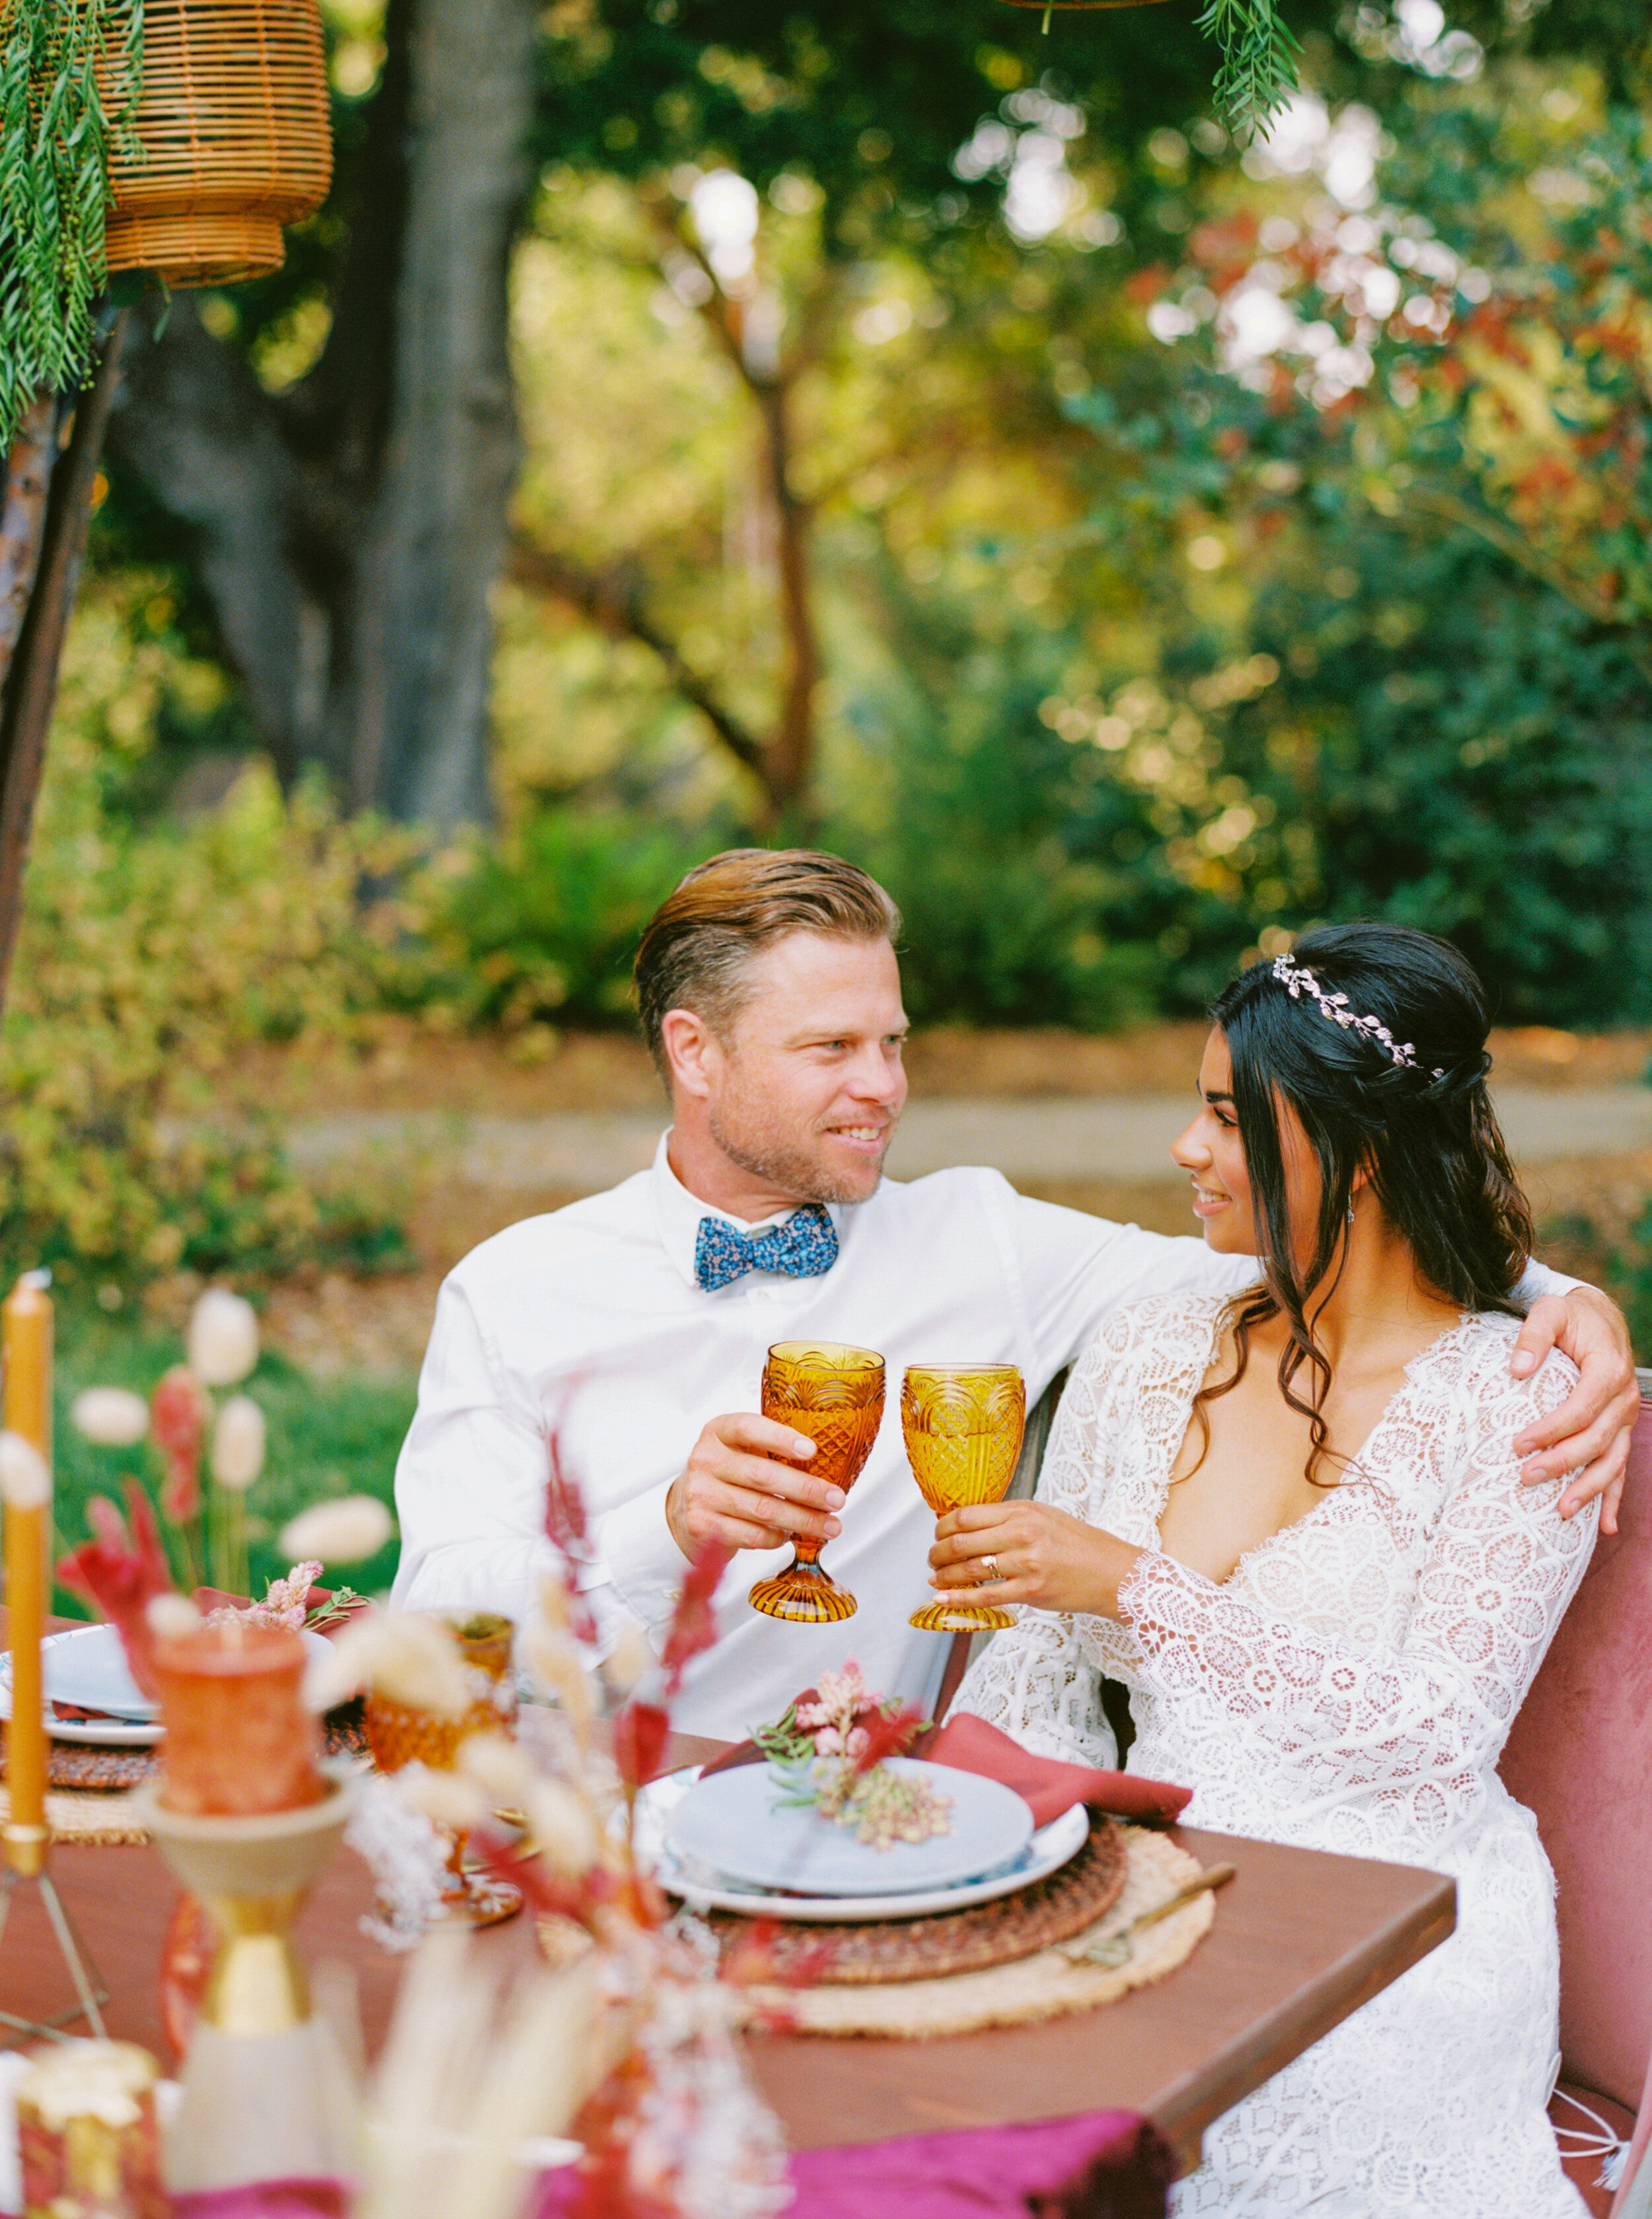 Sarahi Hadden - An Earthy Summer Boho Inspired Wedding with Sunset Hues at Gardener Ranch-33.jpg